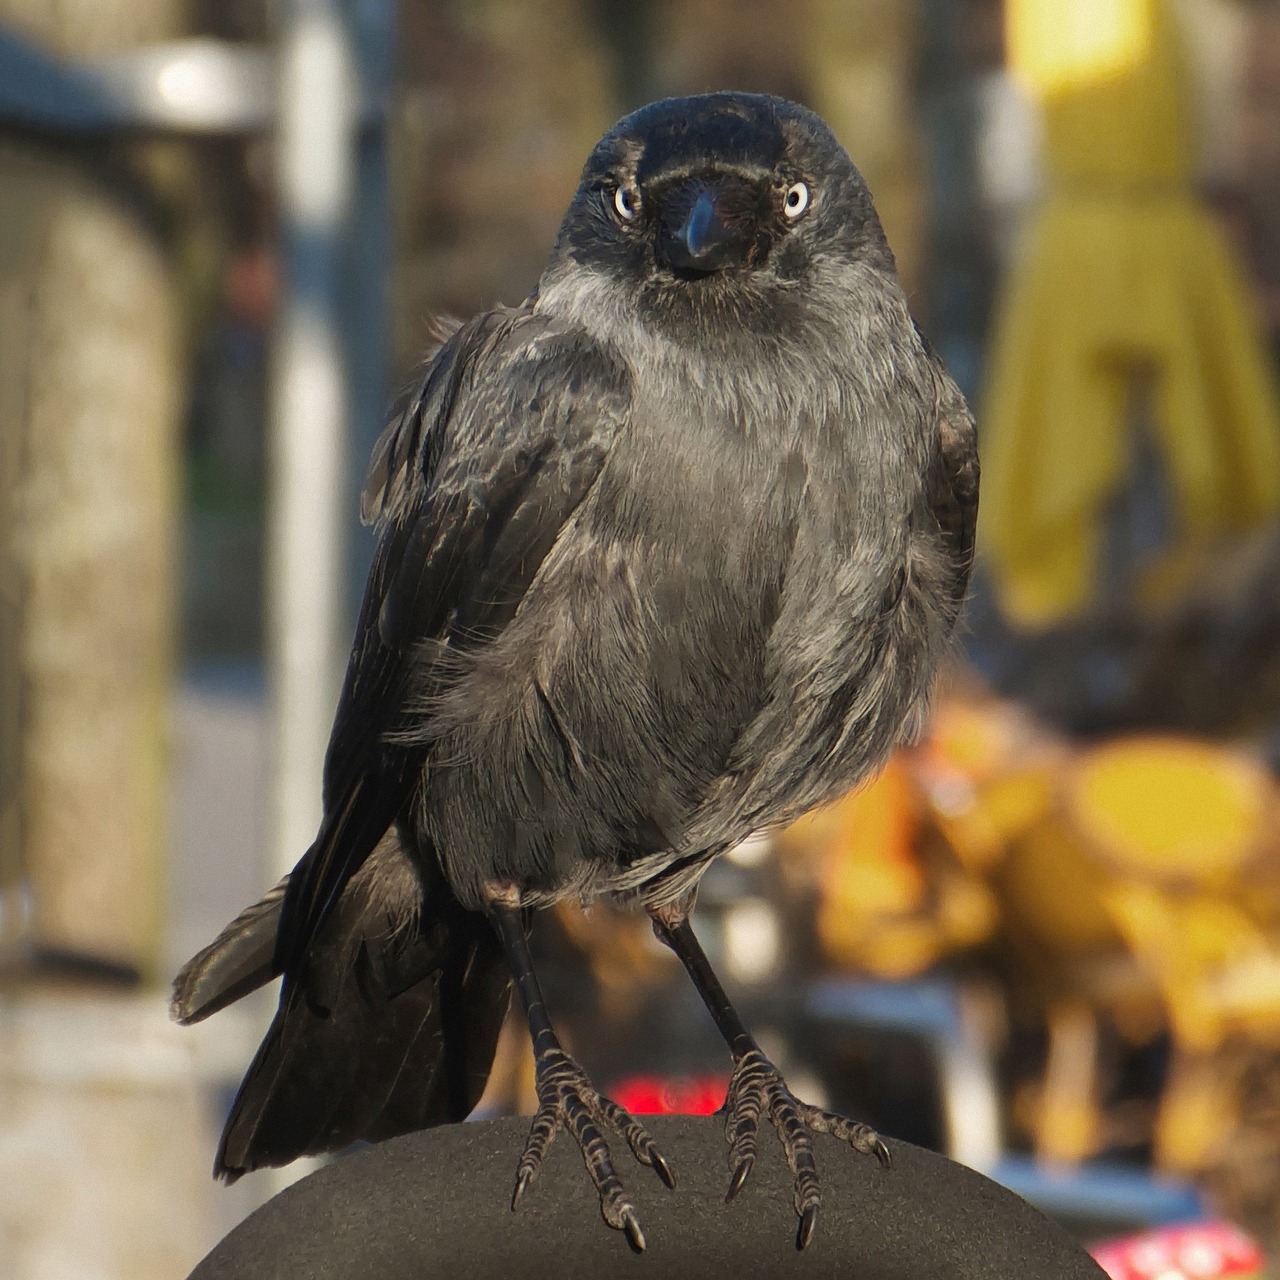 jackdaw songbird raven bird free photo